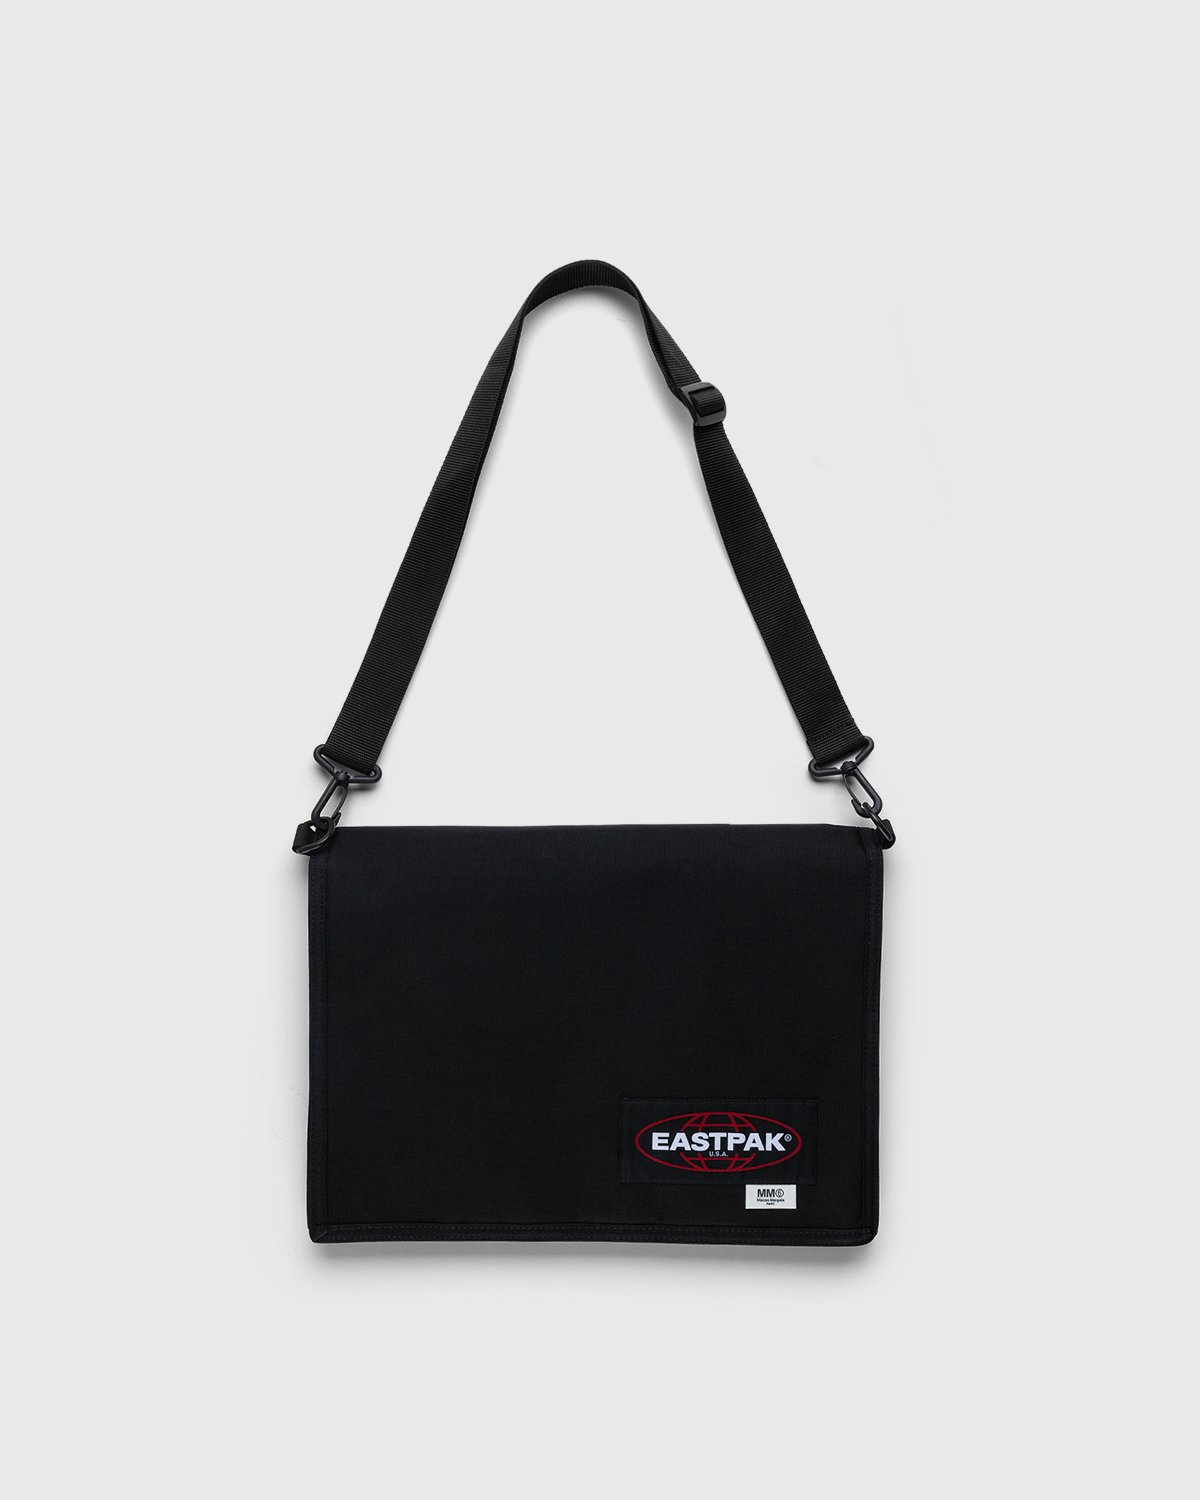 MM6 Maison Margiela x Eastpak - Borsa Tracolla Shoulder Bag Black - Accessories - Black - Image 1